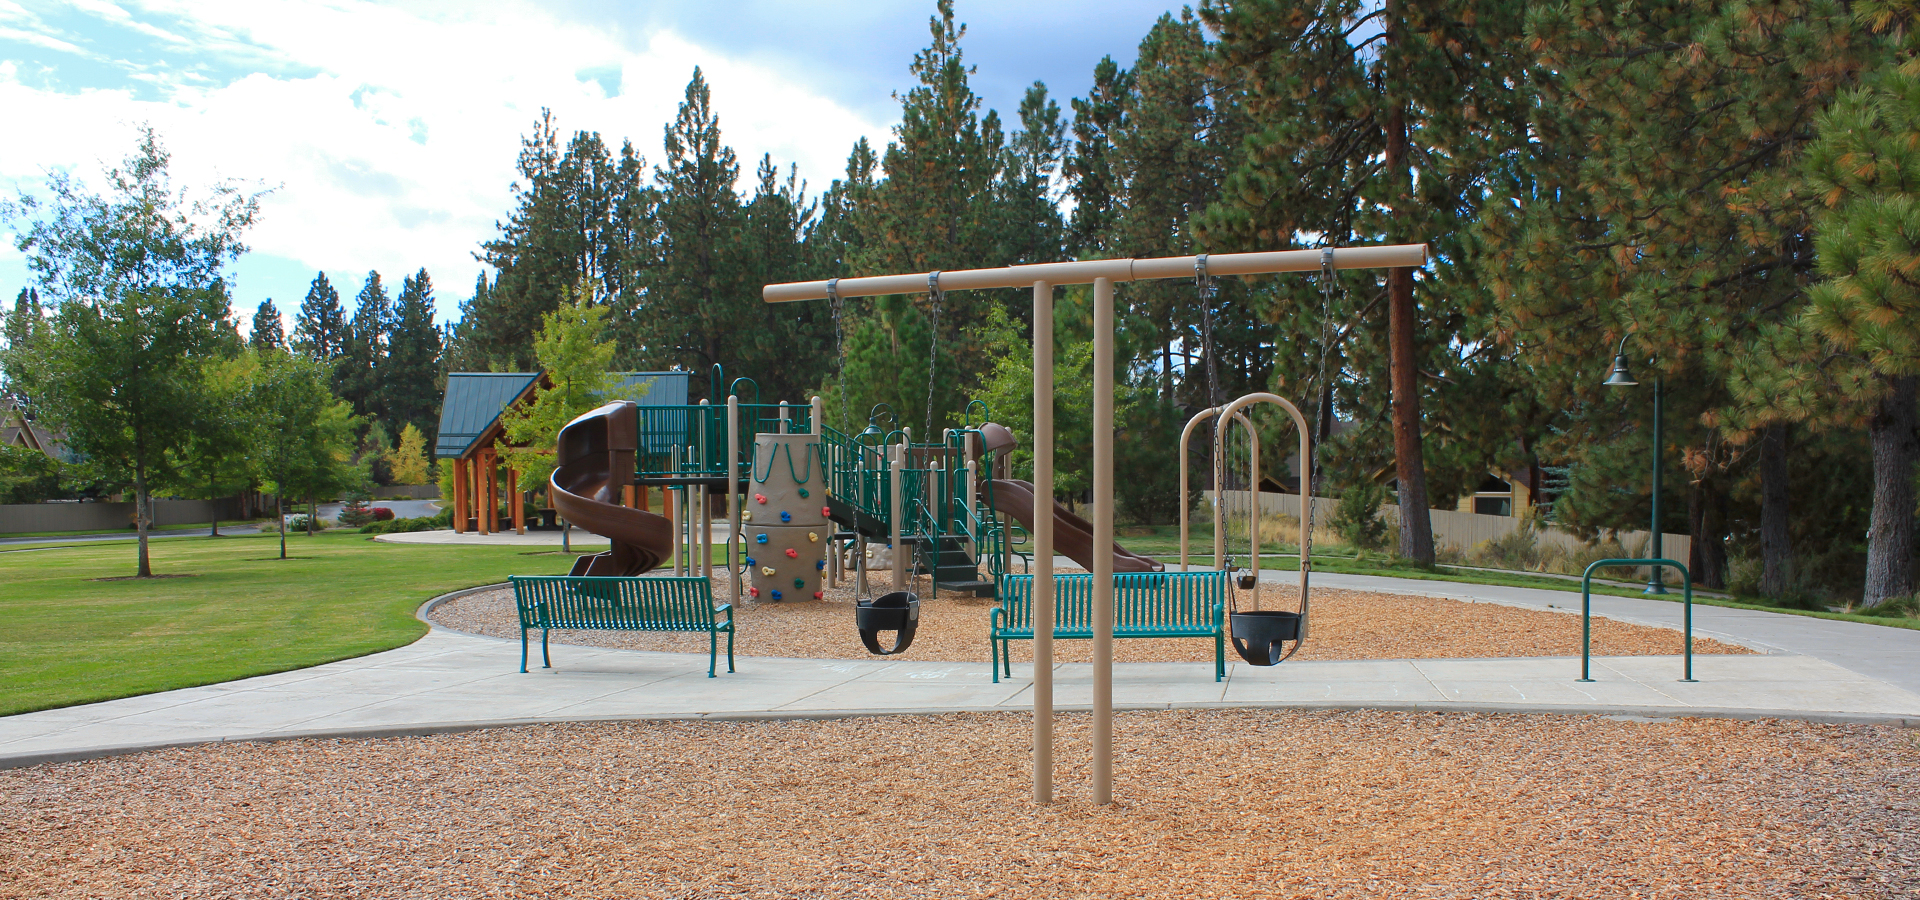 The playground at Wildflower Park.